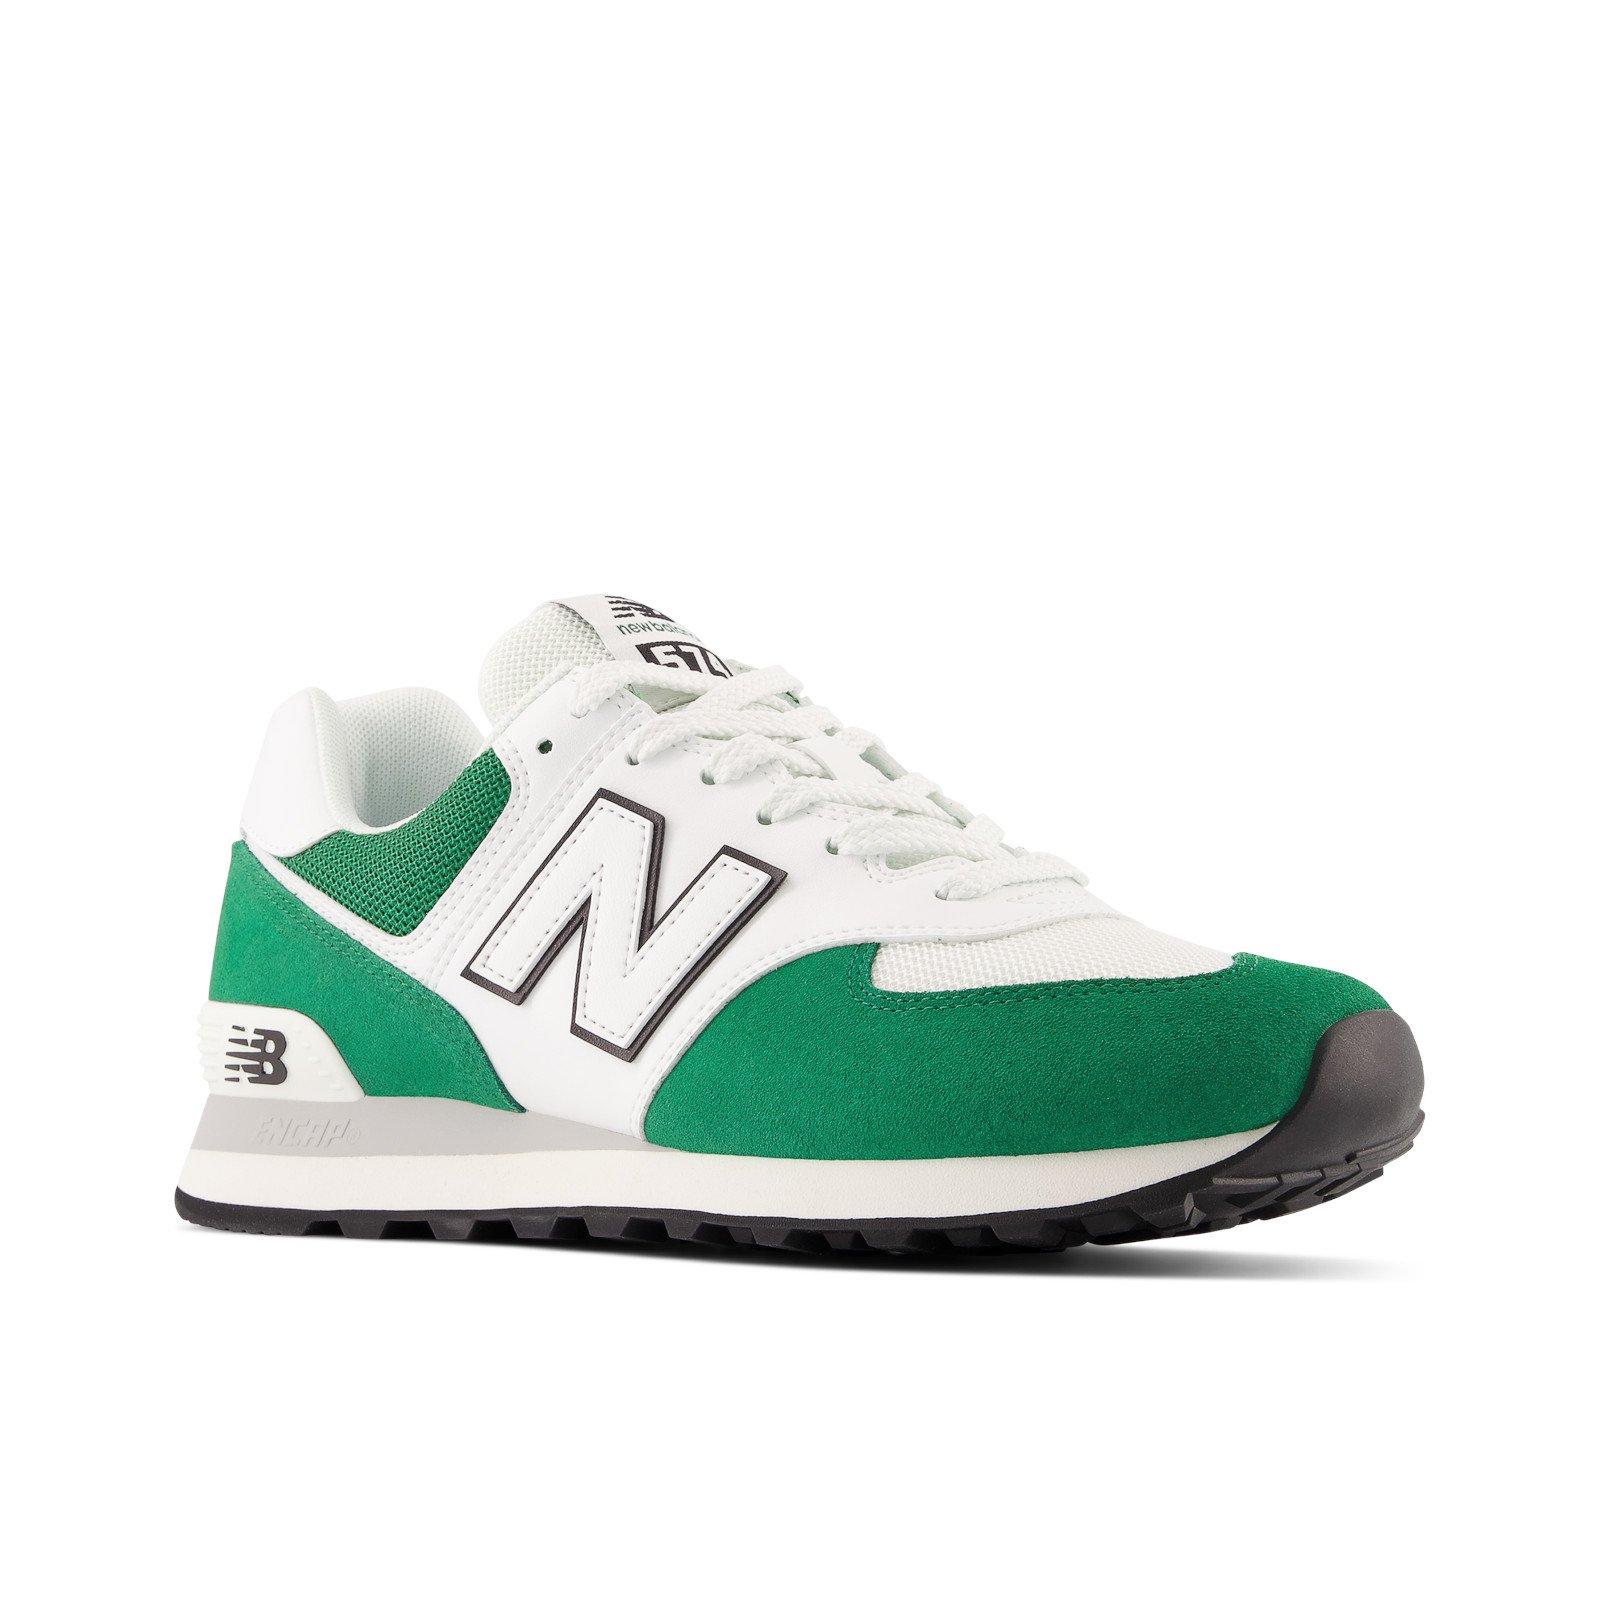 New Balance Green/White" Men's Shoe